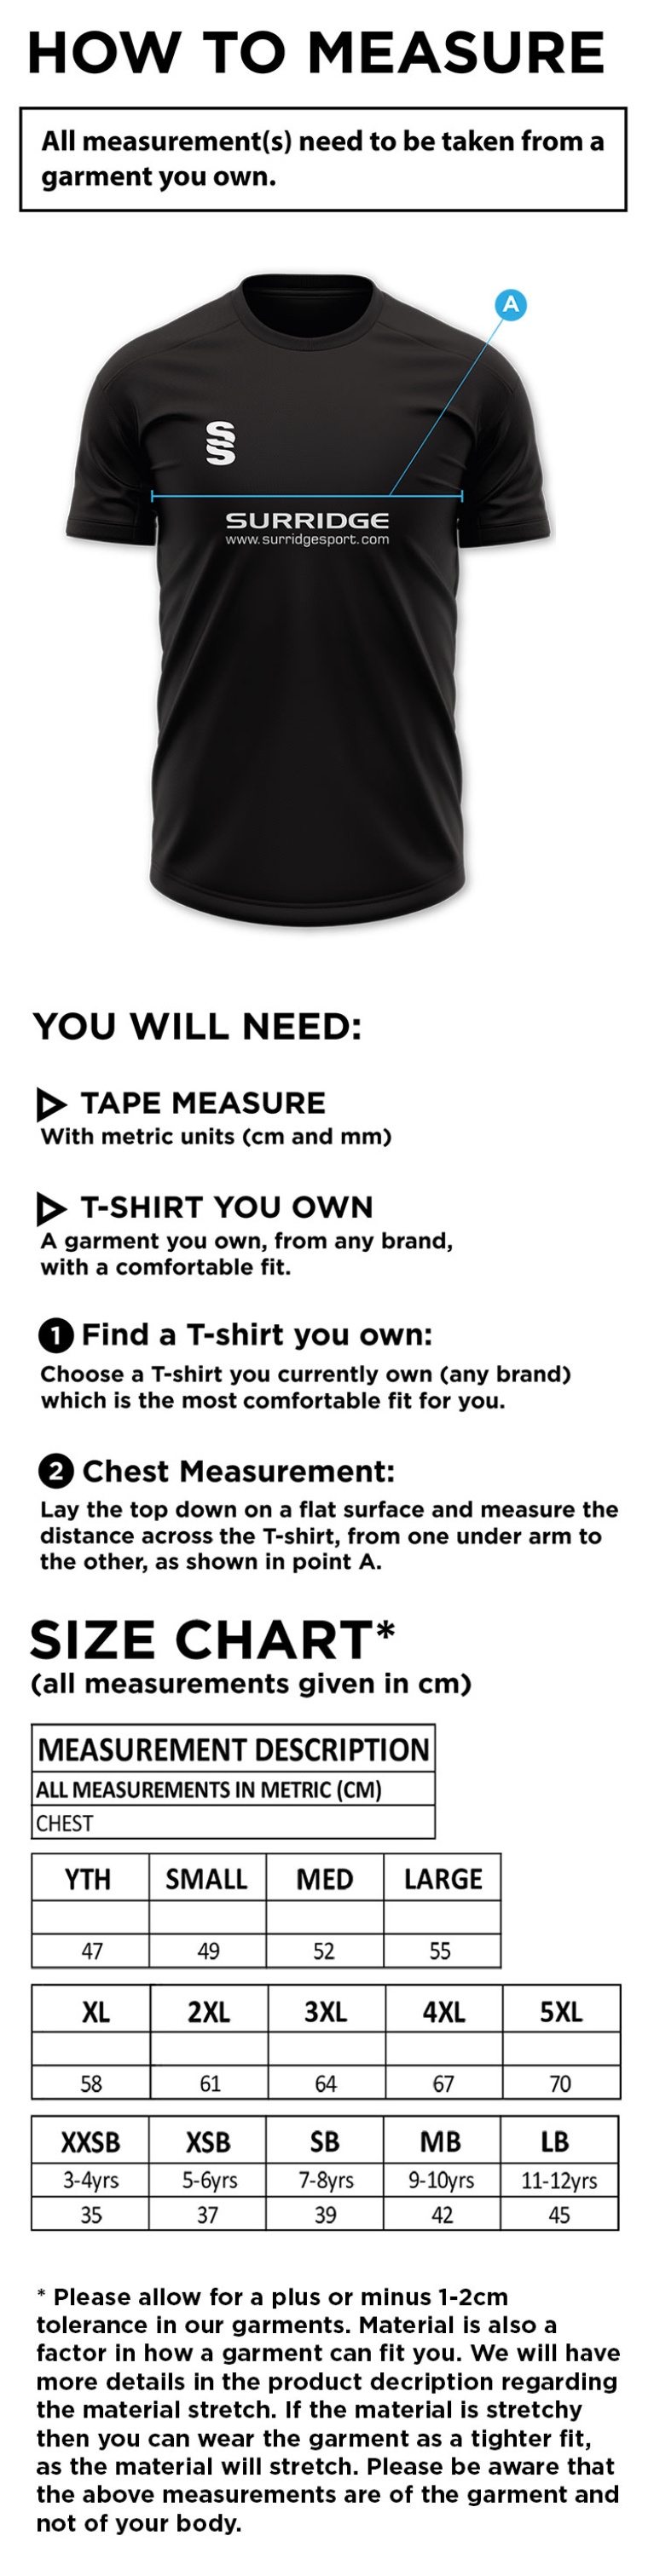 Women's Blade Polo Shirt : Black / White - Size Guide